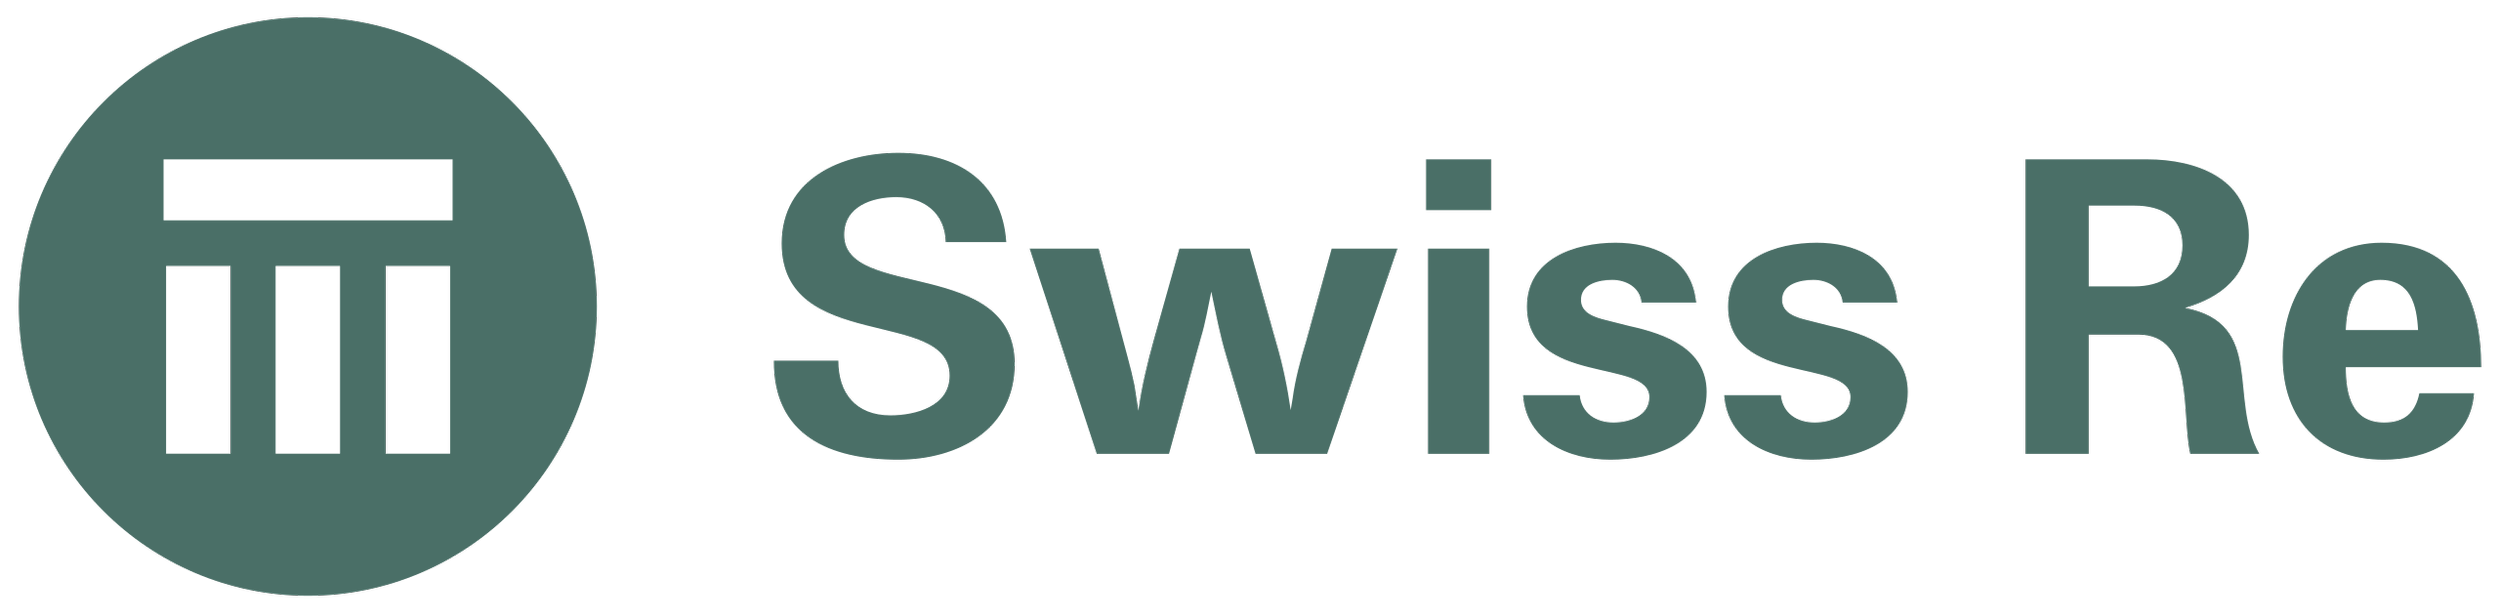 Swiss_Re_2013_logo.svg.png